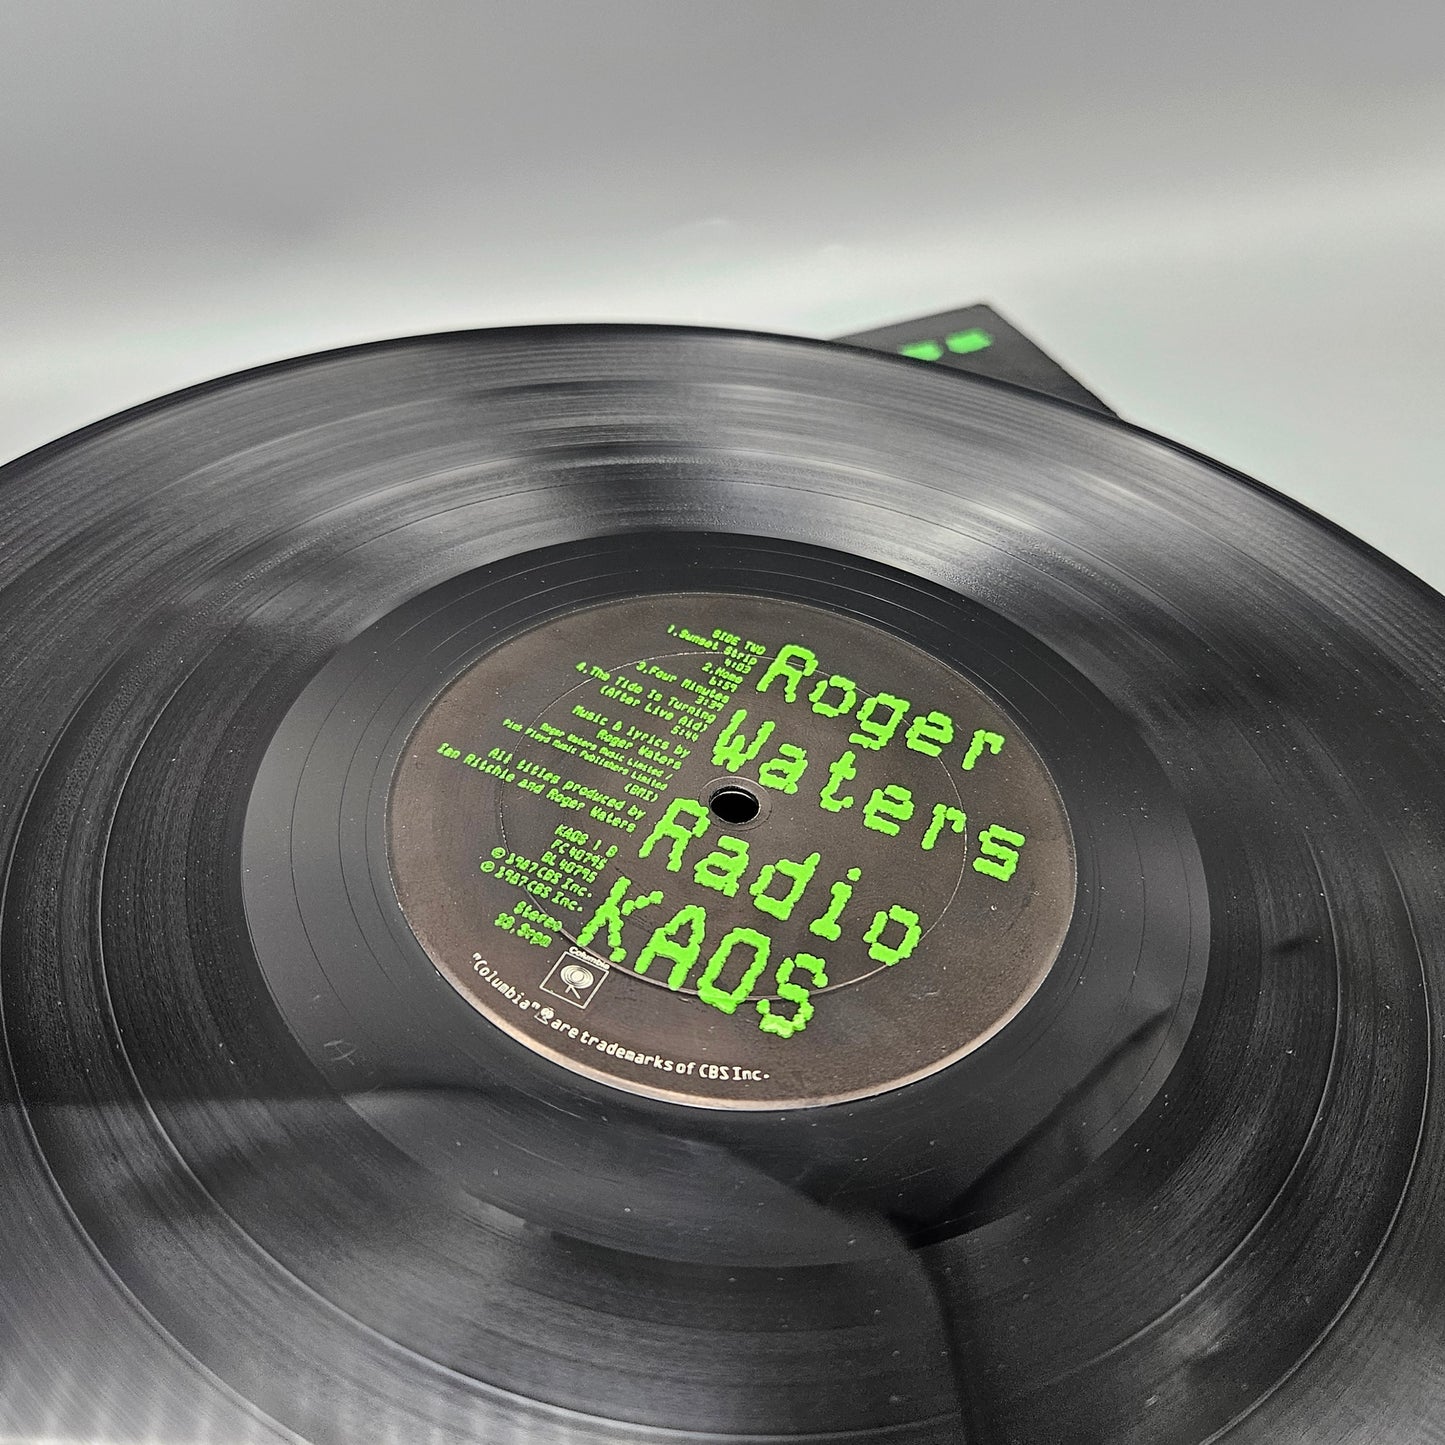 1987 Rogers Waters Album Radio Kaos LP Record